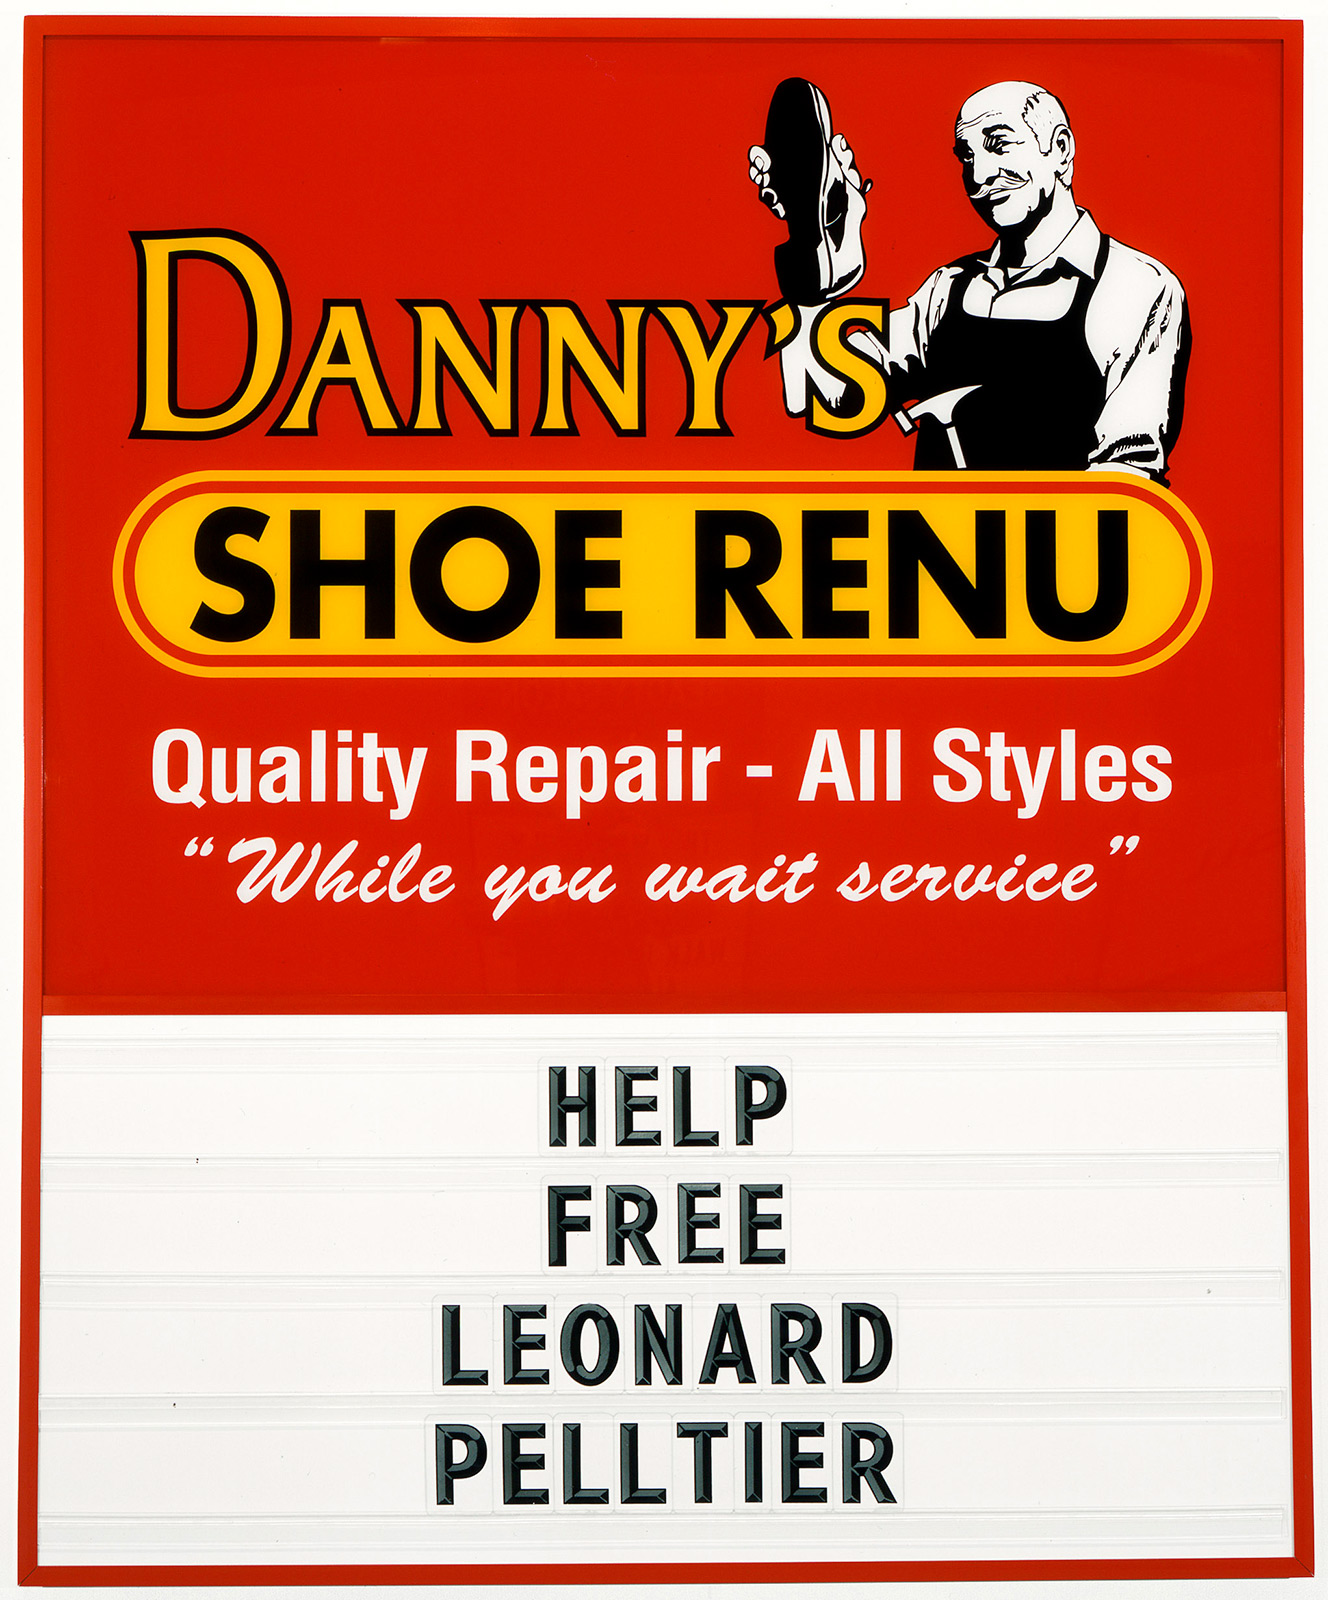 Danny's Shoe Renu, 2001